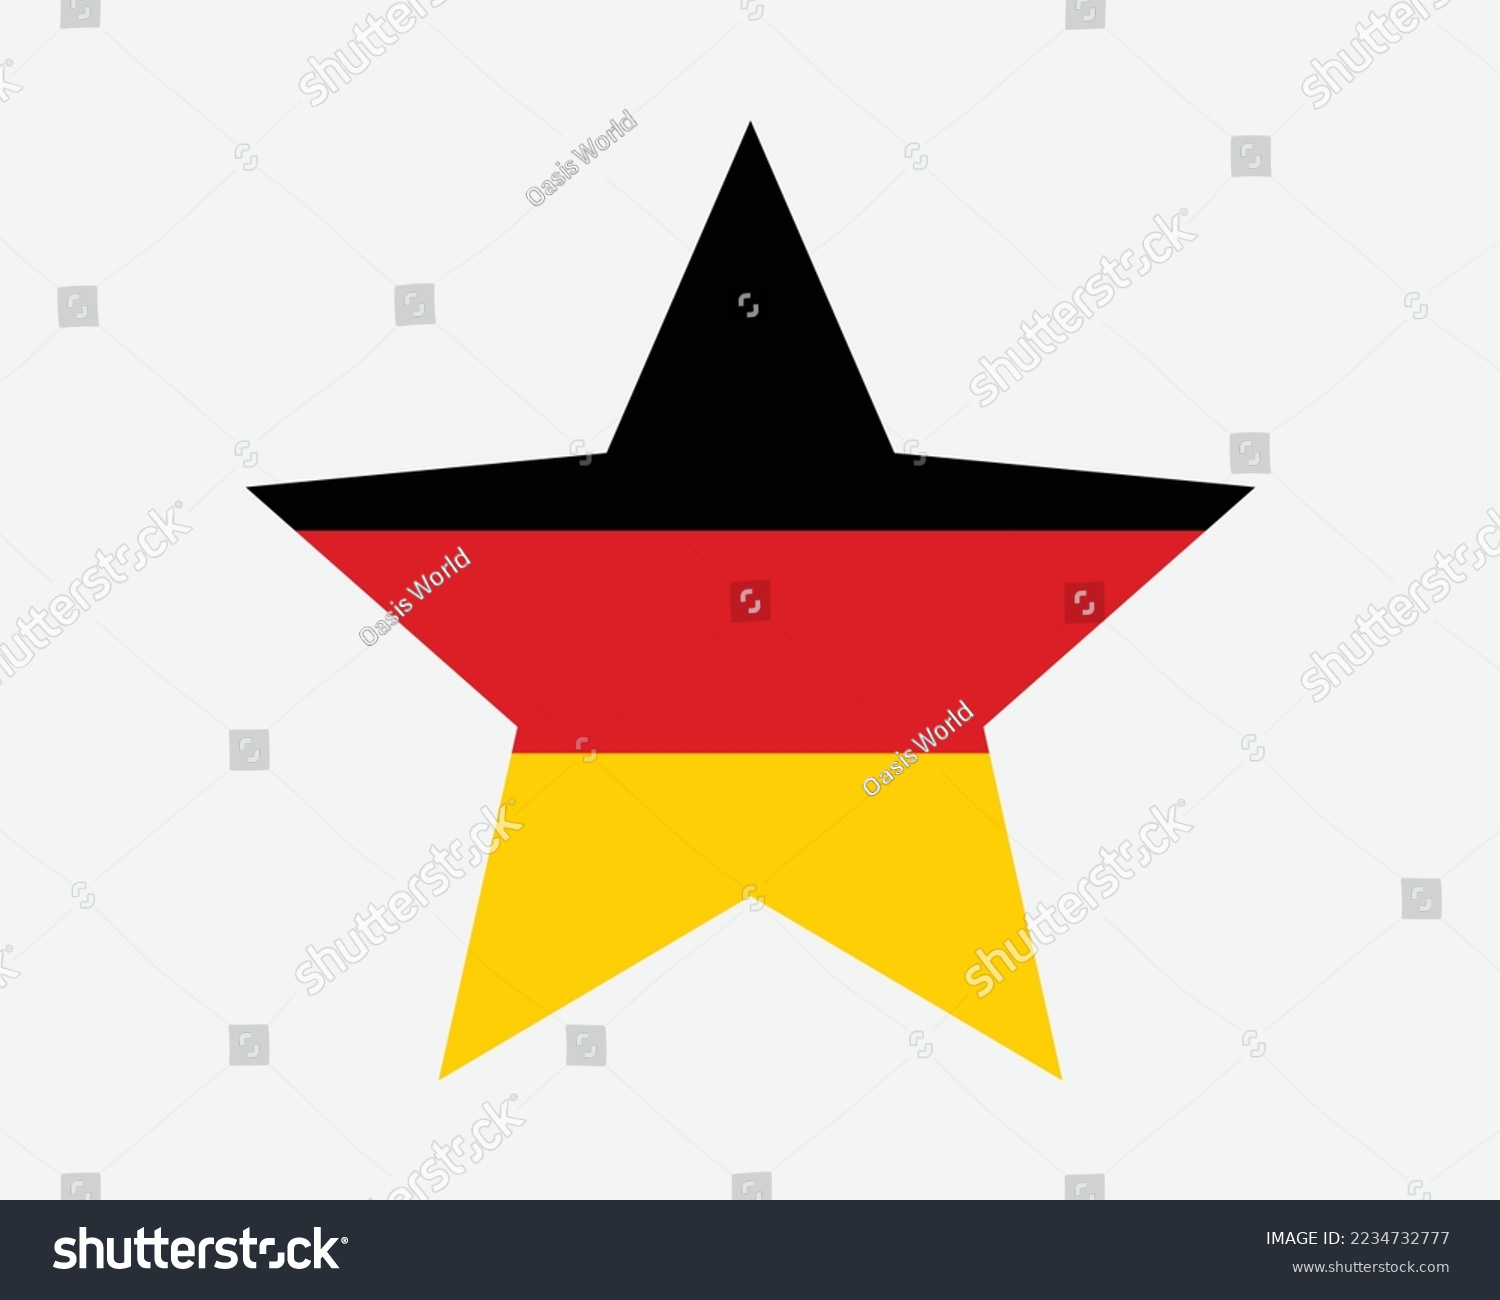 SVG of Germany Star Flag. German Star Shape Flag. Deutschland Country National Banner Icon Symbol Vector Flat Artwork Graphic Illustration svg